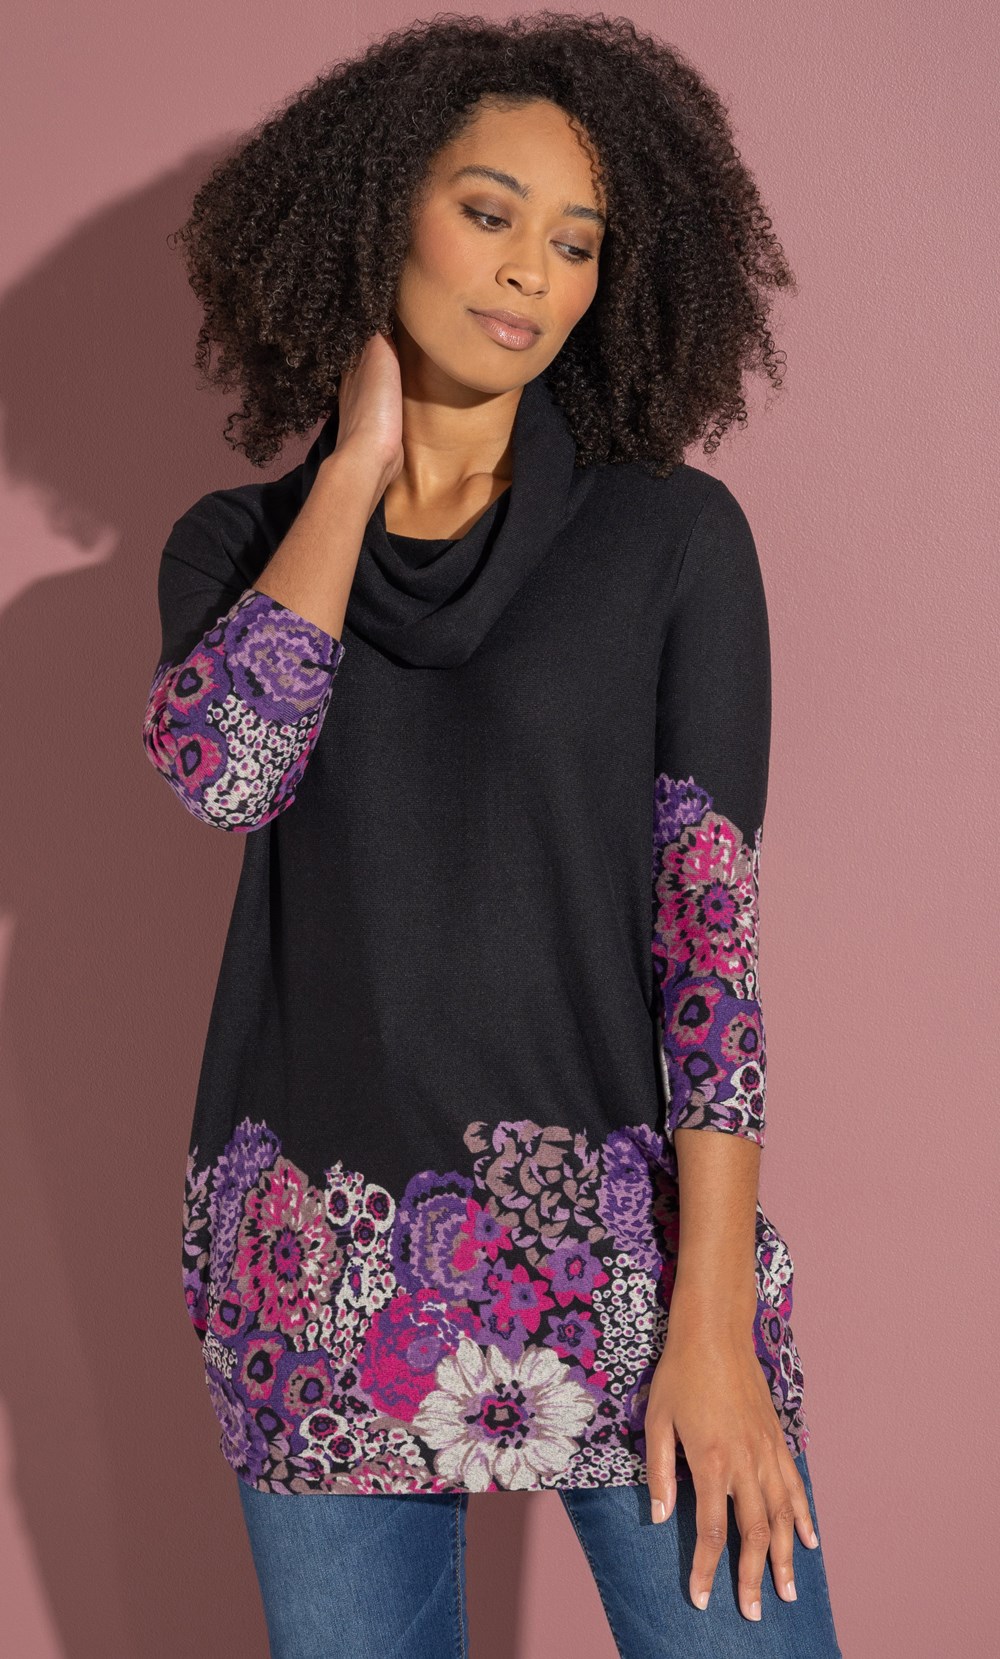 Brands - Klass Cowl Neck Printed Brushed Knitted Top Black/Purple Women’s